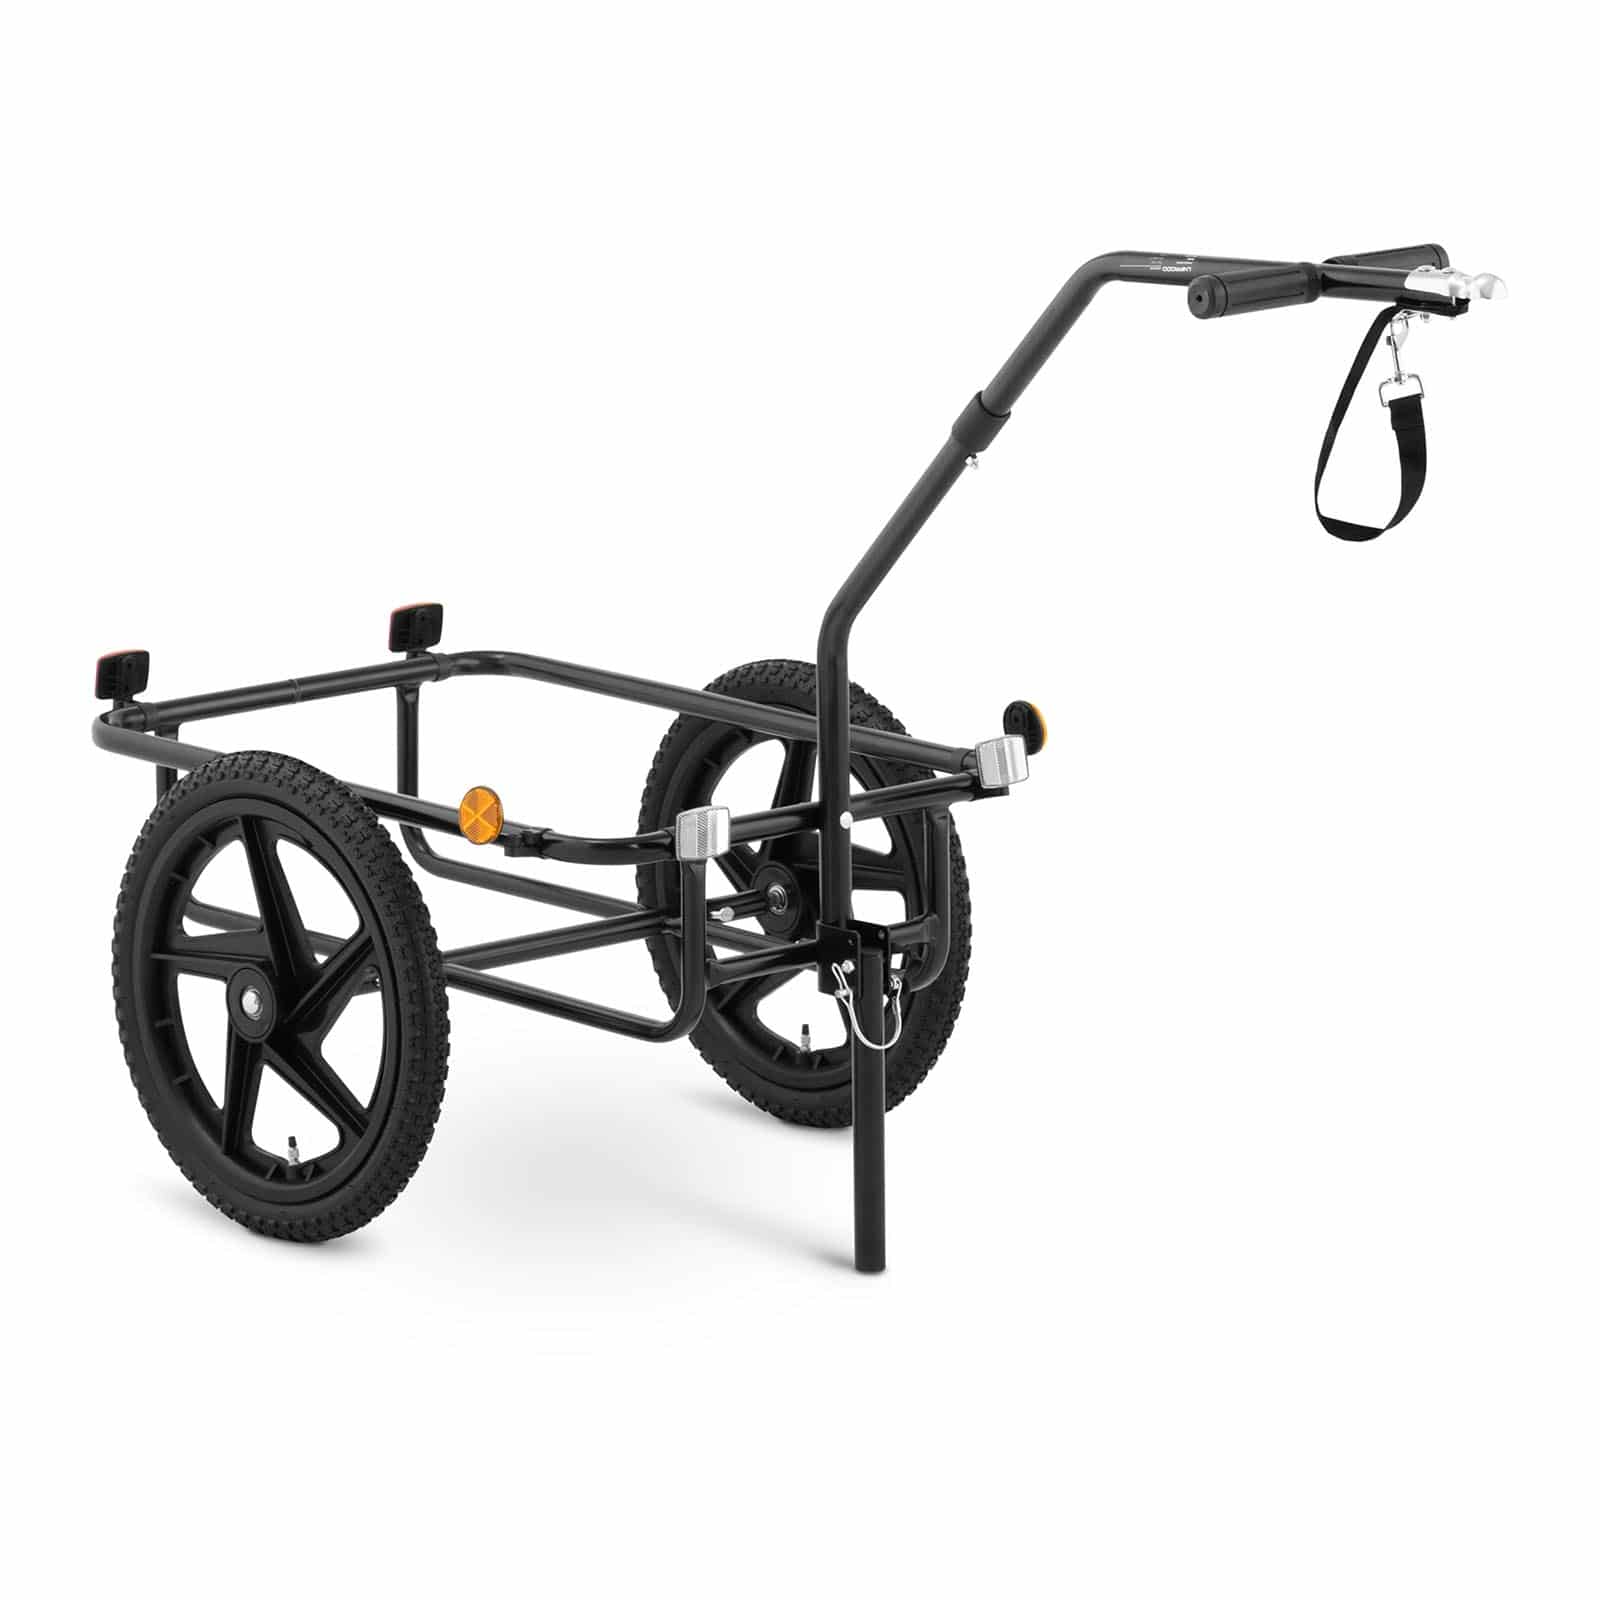 Uniprodo Remolque de bicicleta - 35 kg - reflectores 10250519